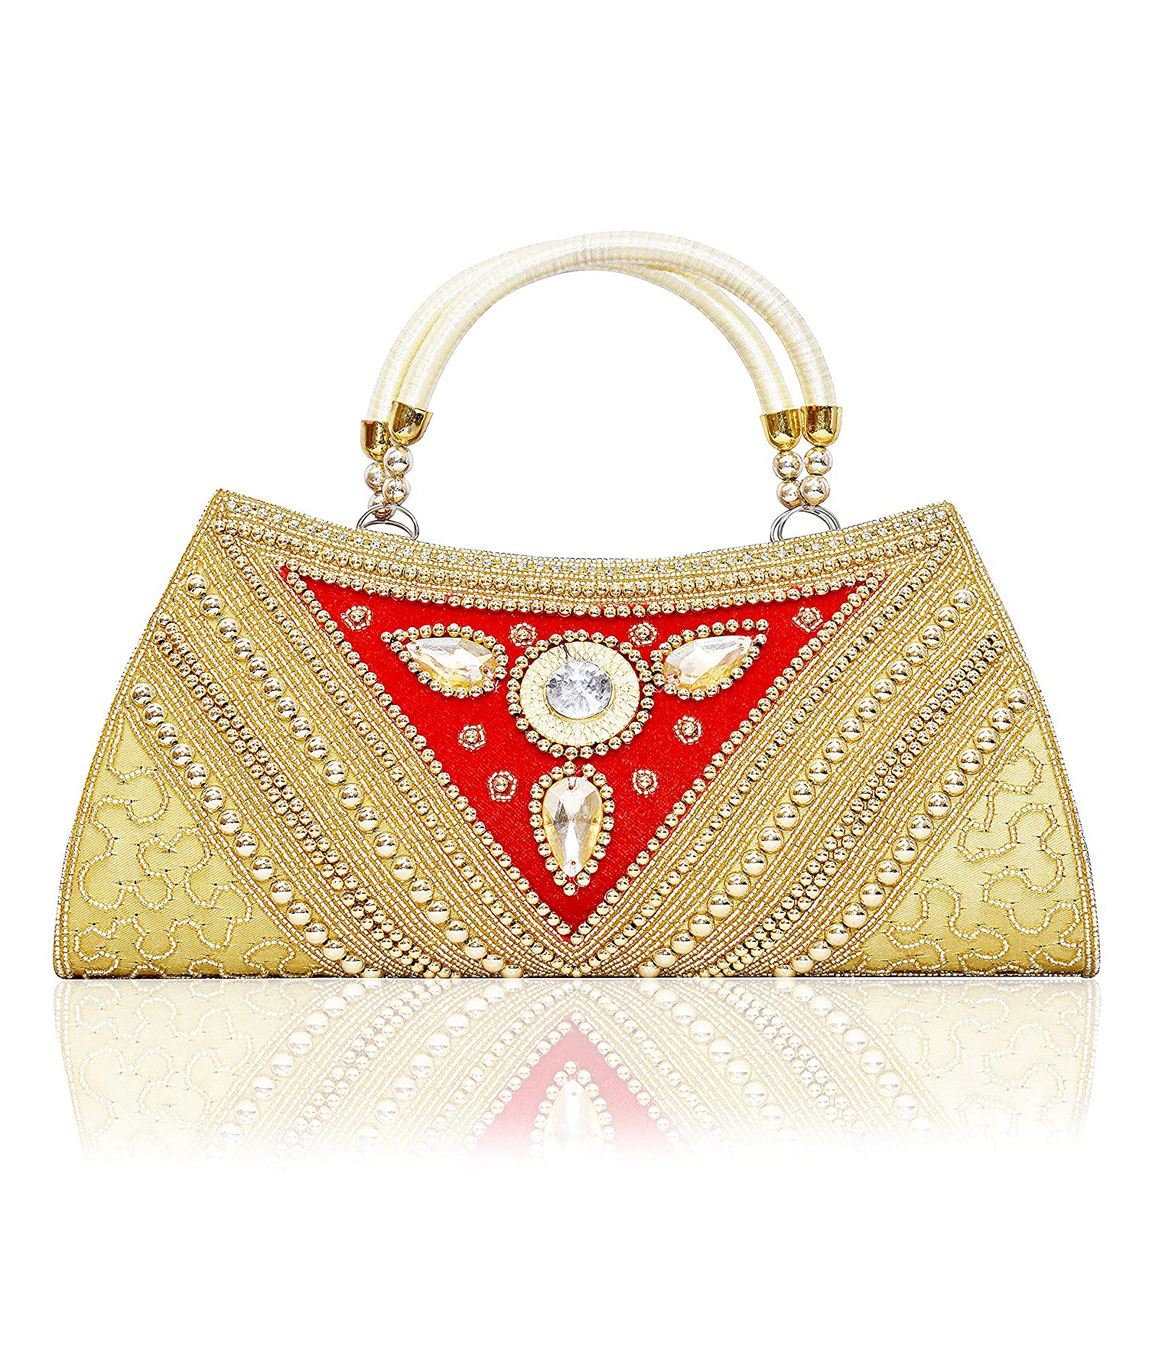 Buy Bag Pepper Latest Handicraft Women's Embroidered Bridal  Handbag/Shoulder Bag for Girl & Women…Rose Gold at Amazon.in